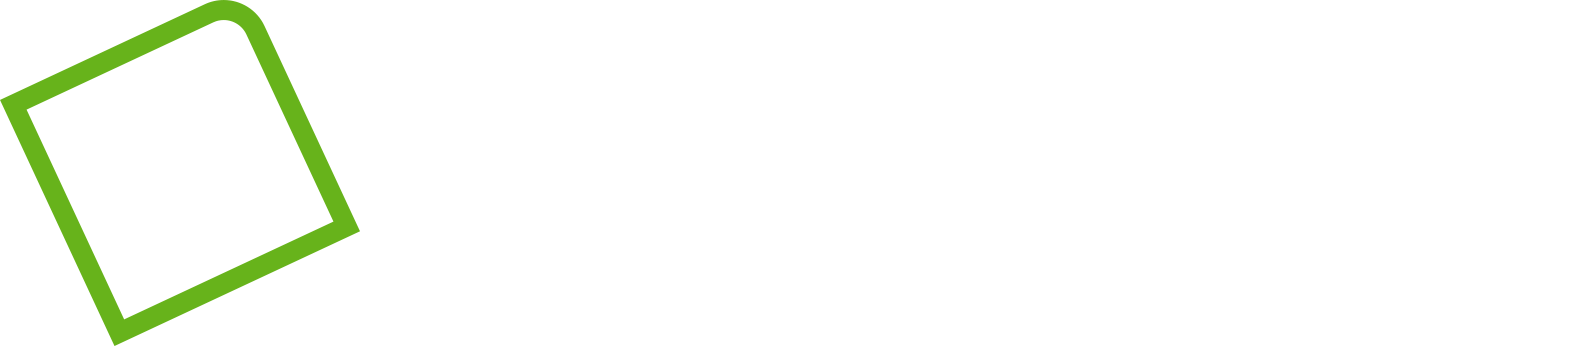 BOXrentals bv logo